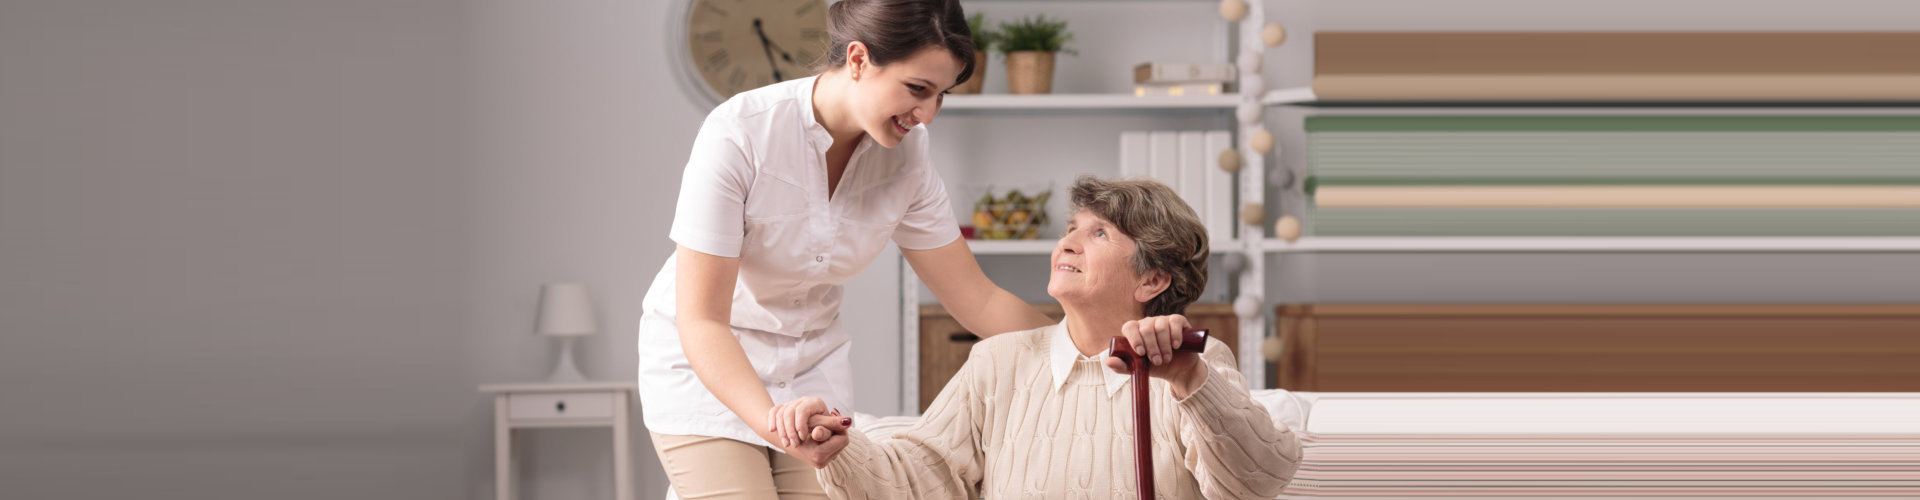 caregiver assisting elder woman on standing up using a walker